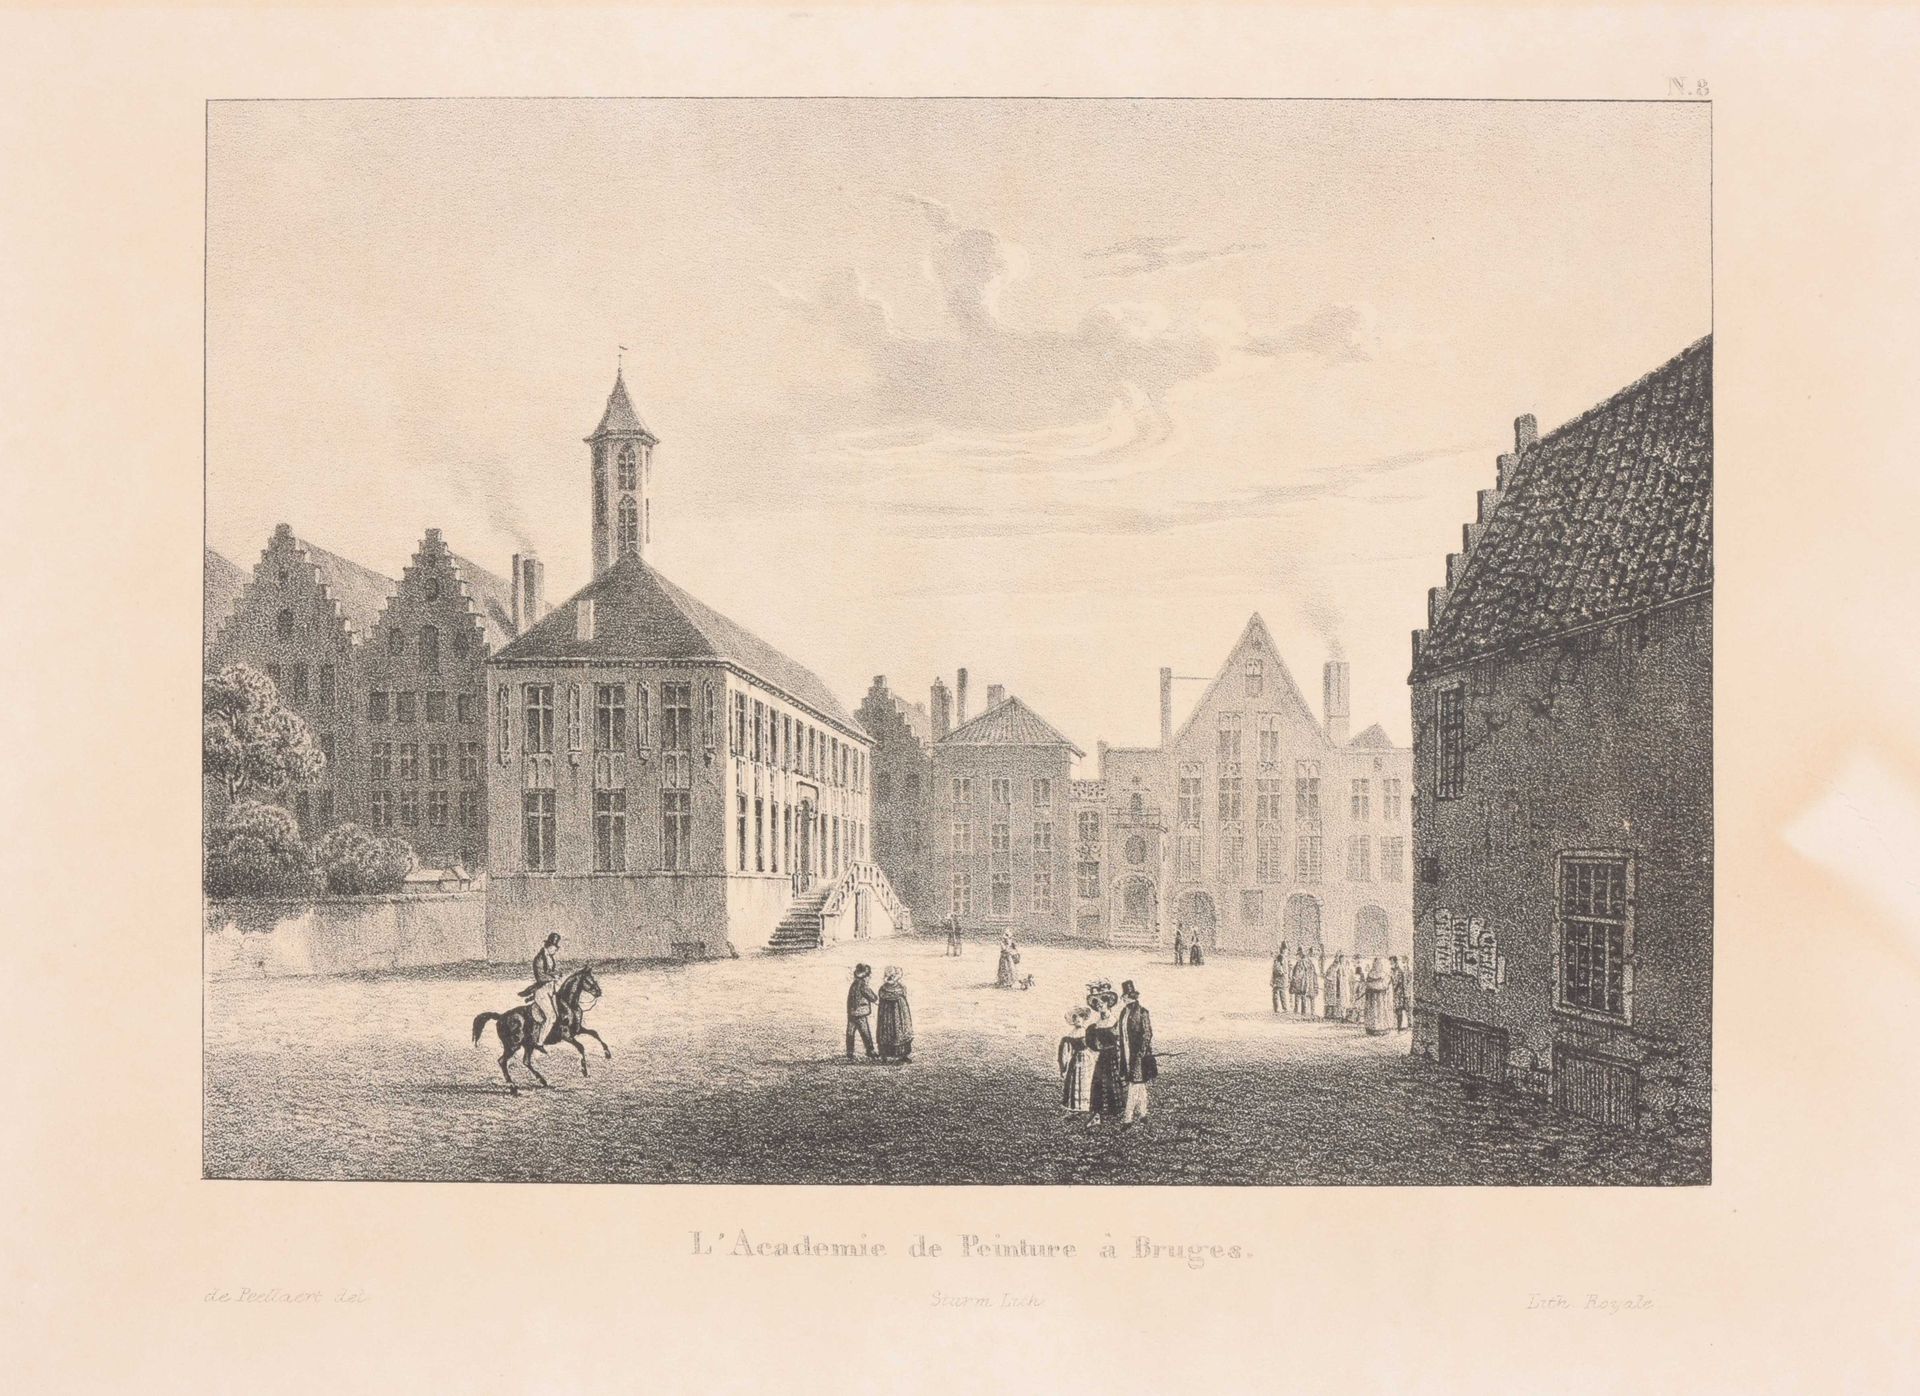 [Brugge] 布鲁日的绘画学院

Sturm naar de Peelaert（约1825年）的平版画（16 x 19.5厘米）。参考文献：Michiels&hellip;